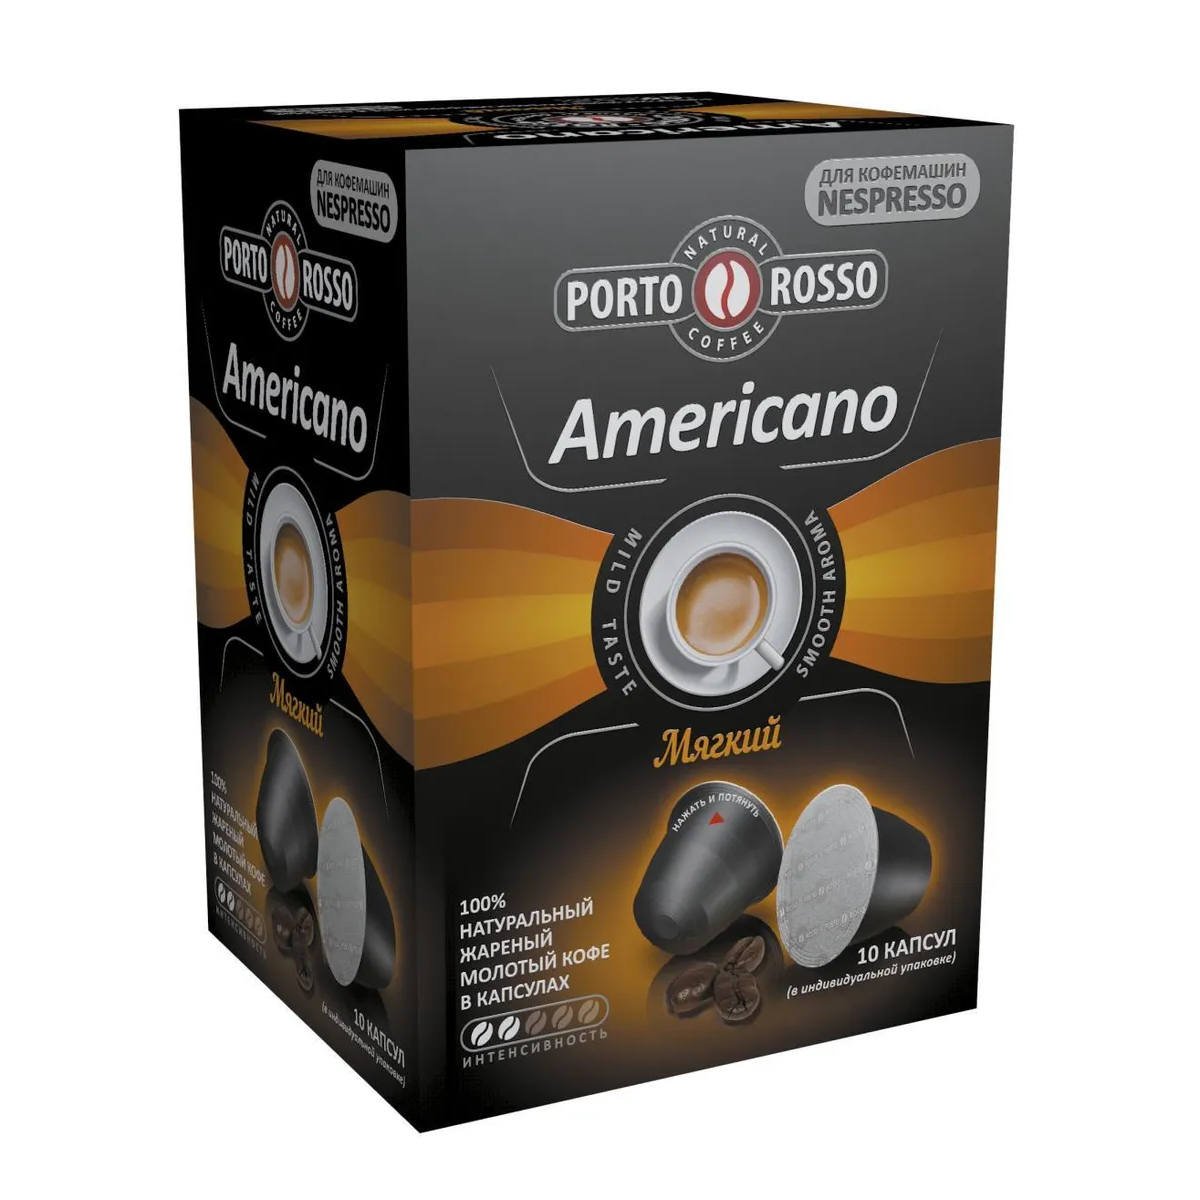 Кофе в капсулах Porto Rosso Americano Мягкий, 10х5 г кофе растворимый porto rosso oro 90 г